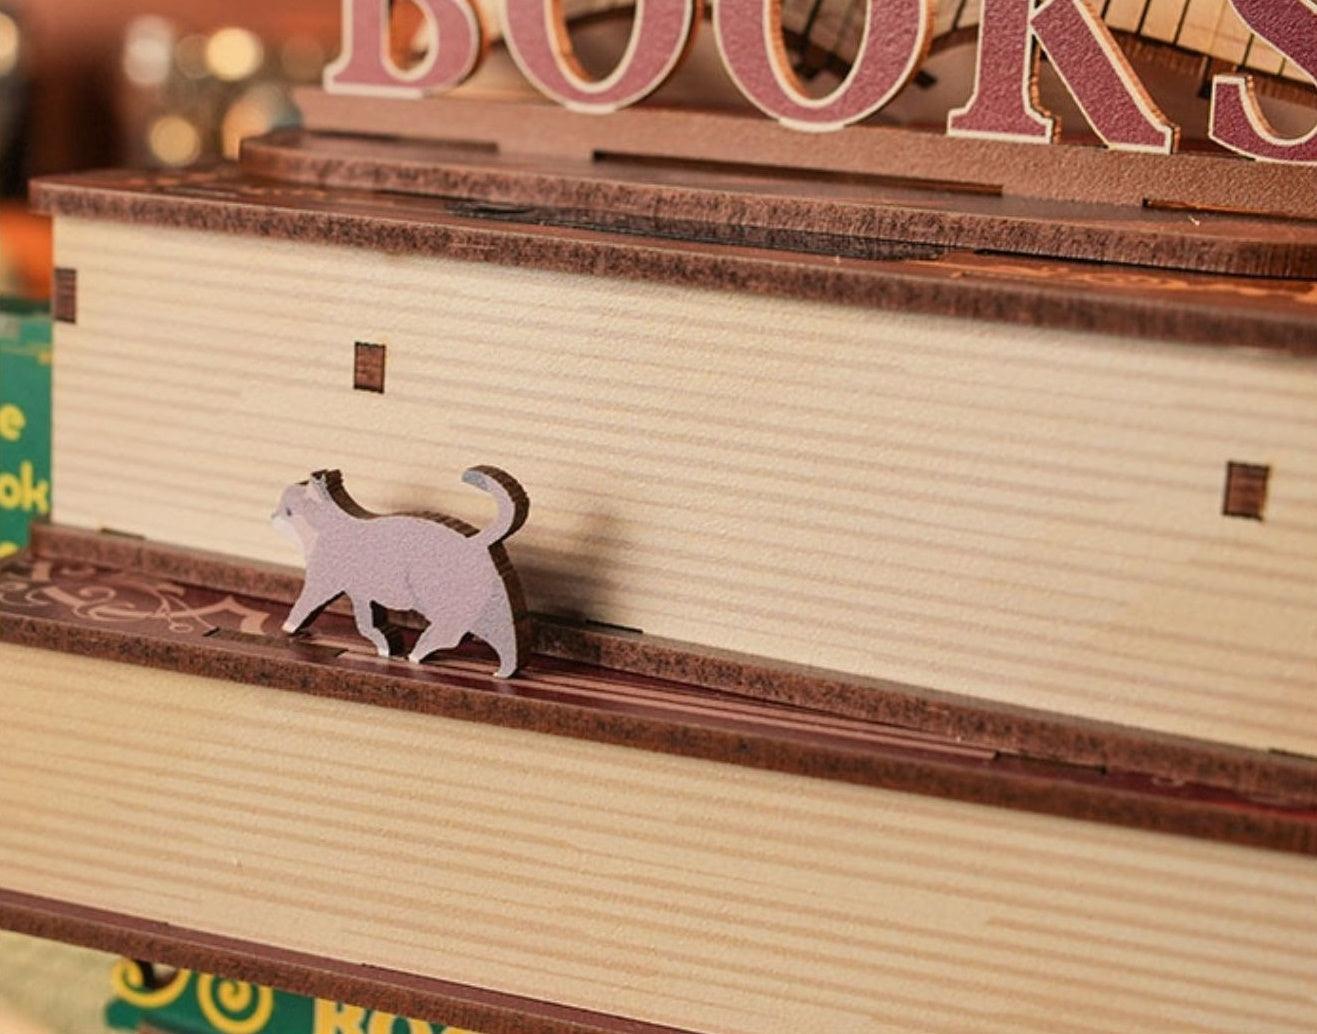 bookstore 3D wooden puzzle diy miniature crafts